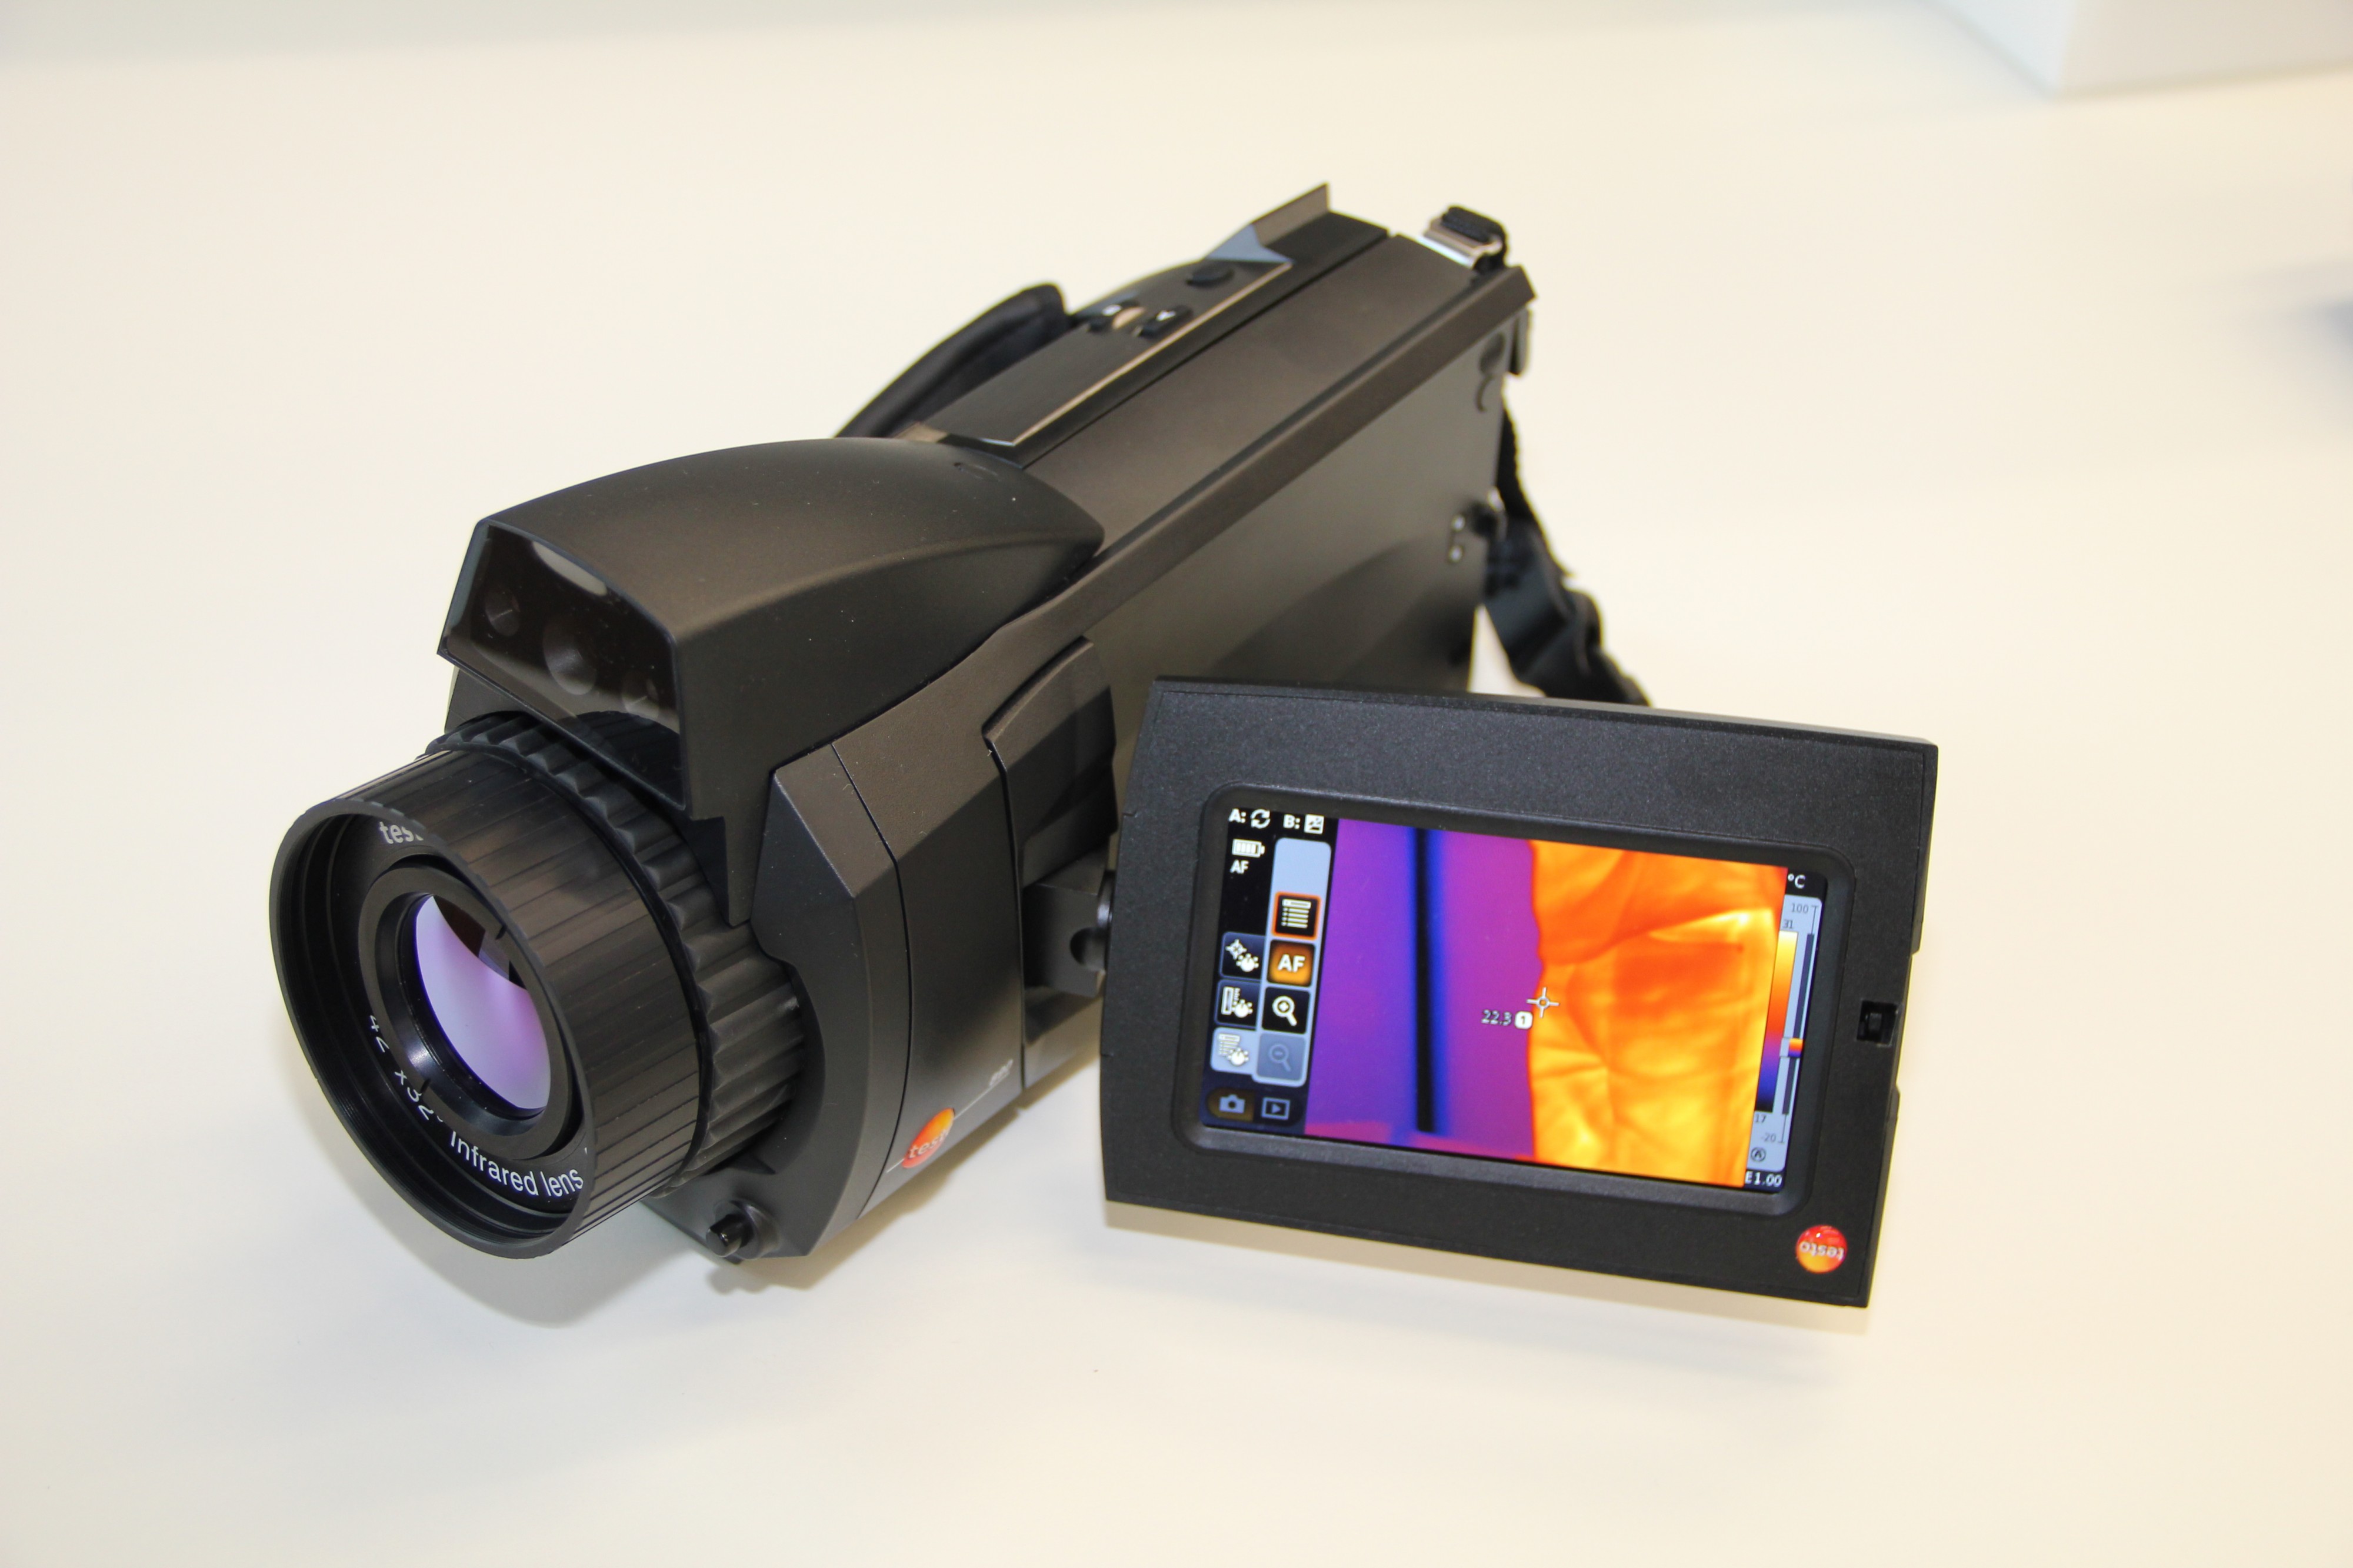 Infrared Camera